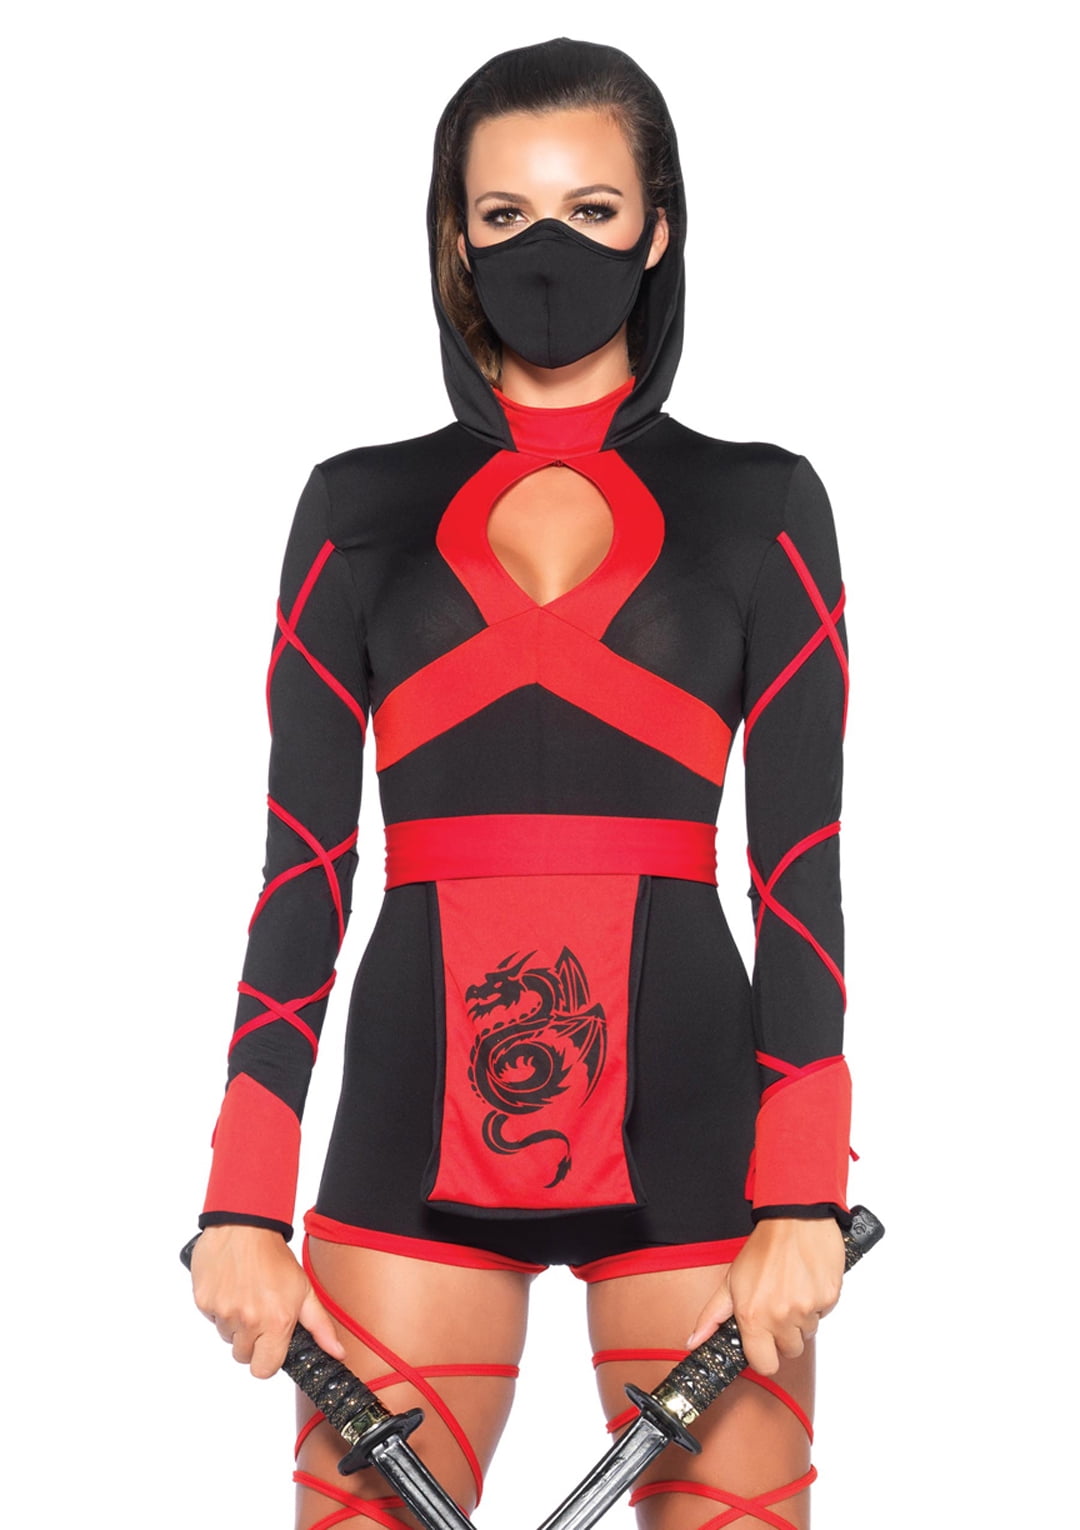 Leg Avenue Dragon Ninja Women's Halloween Fancy-Dress Costume for Adult, S